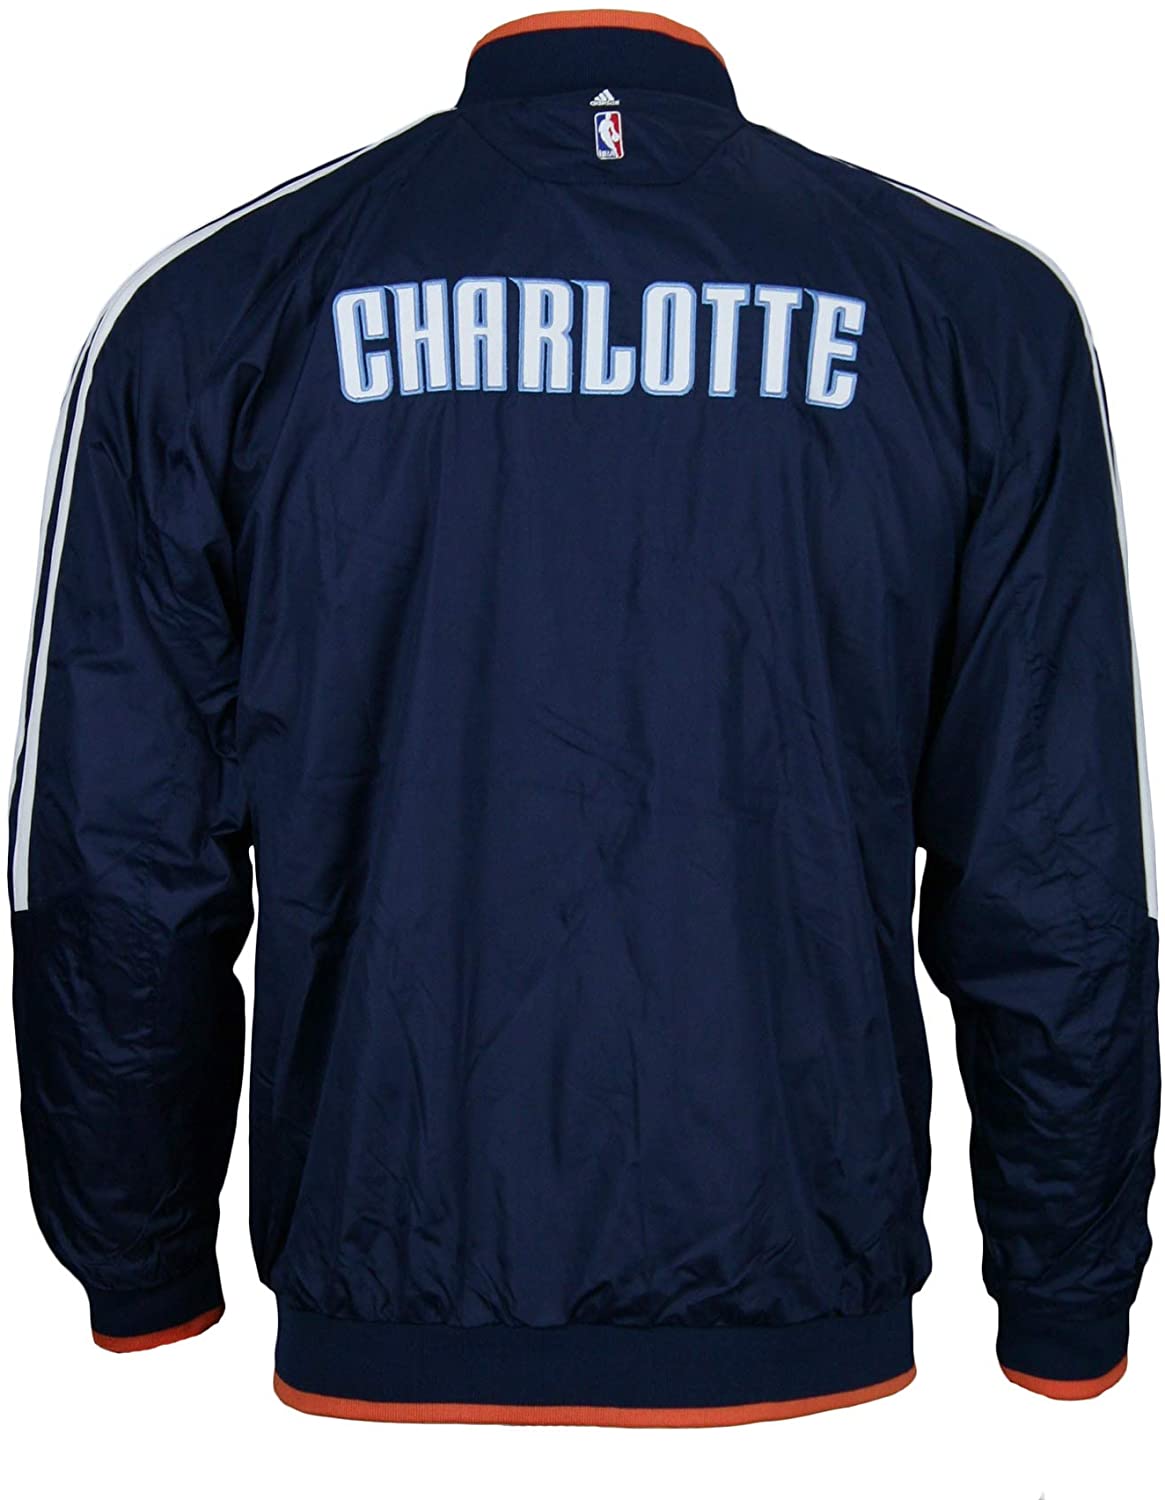 Adidas NBA Youth Charlotte Bobcats On Court Reversible Jacket - image 3 of 8